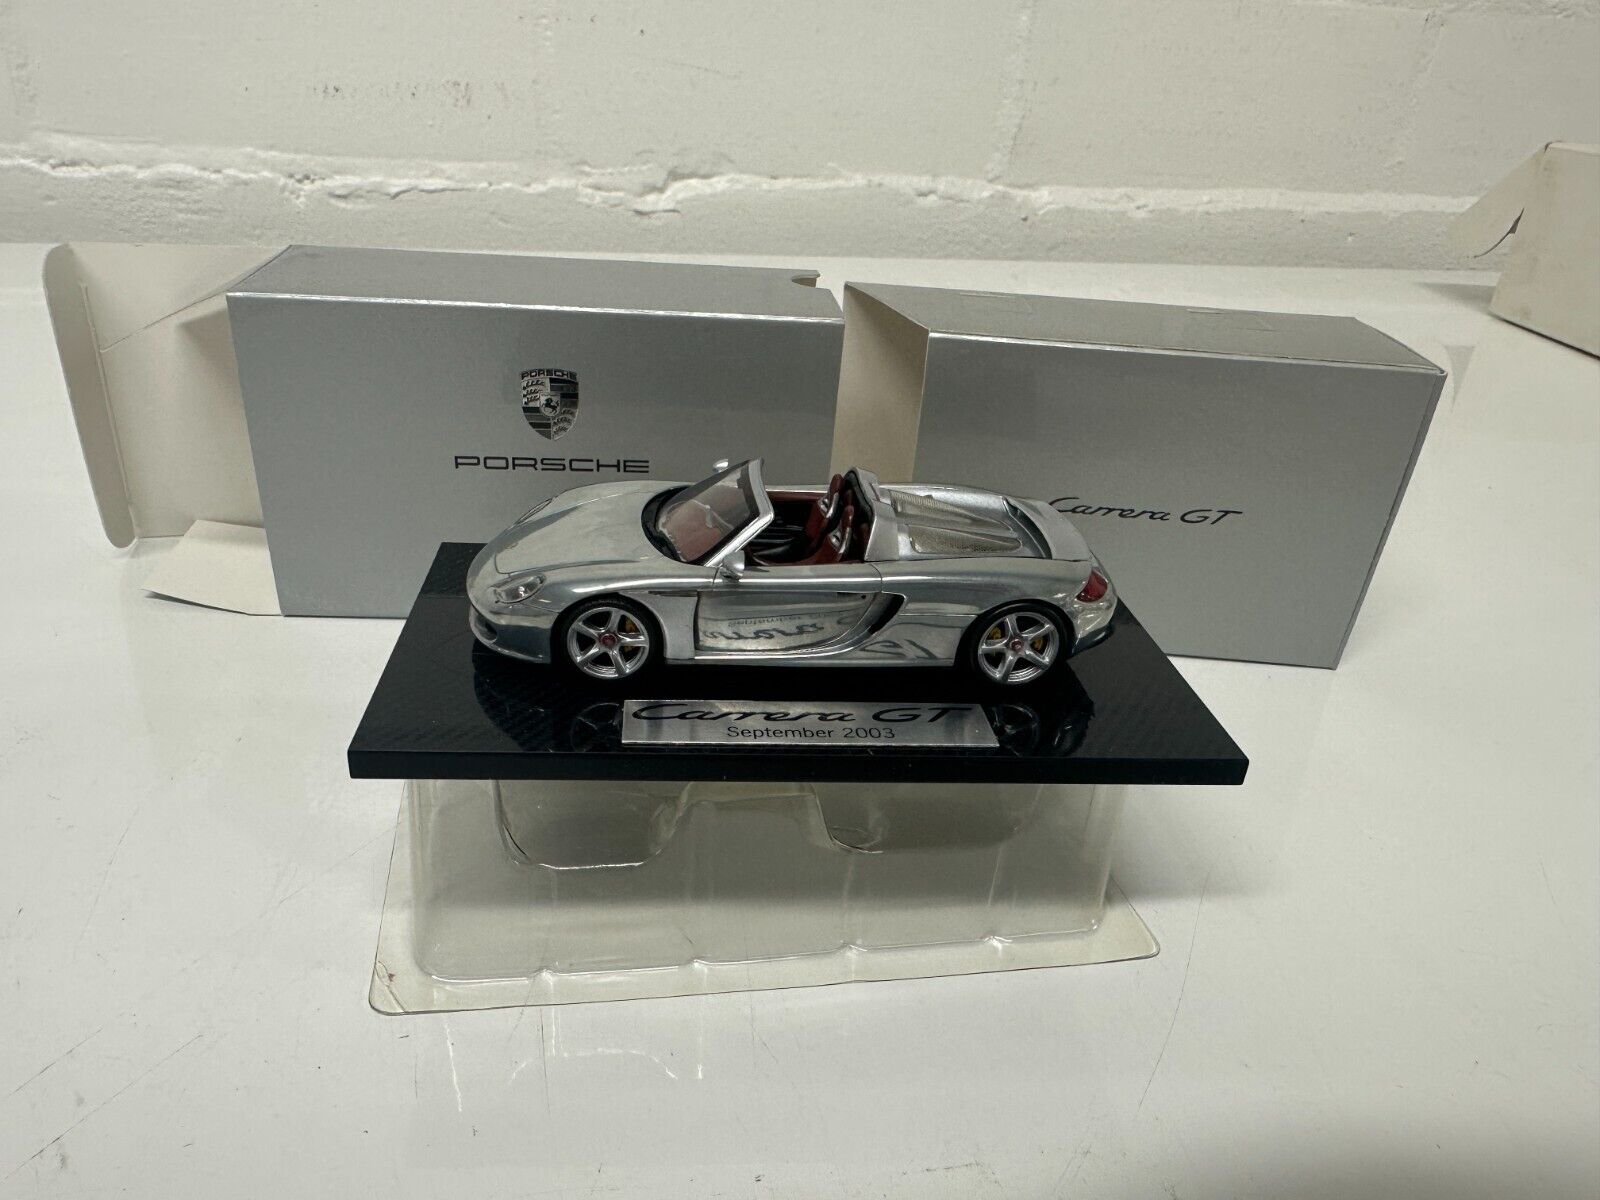 Porsche Carrera GT Car Model w/ Display 1:43 Genuine Original W